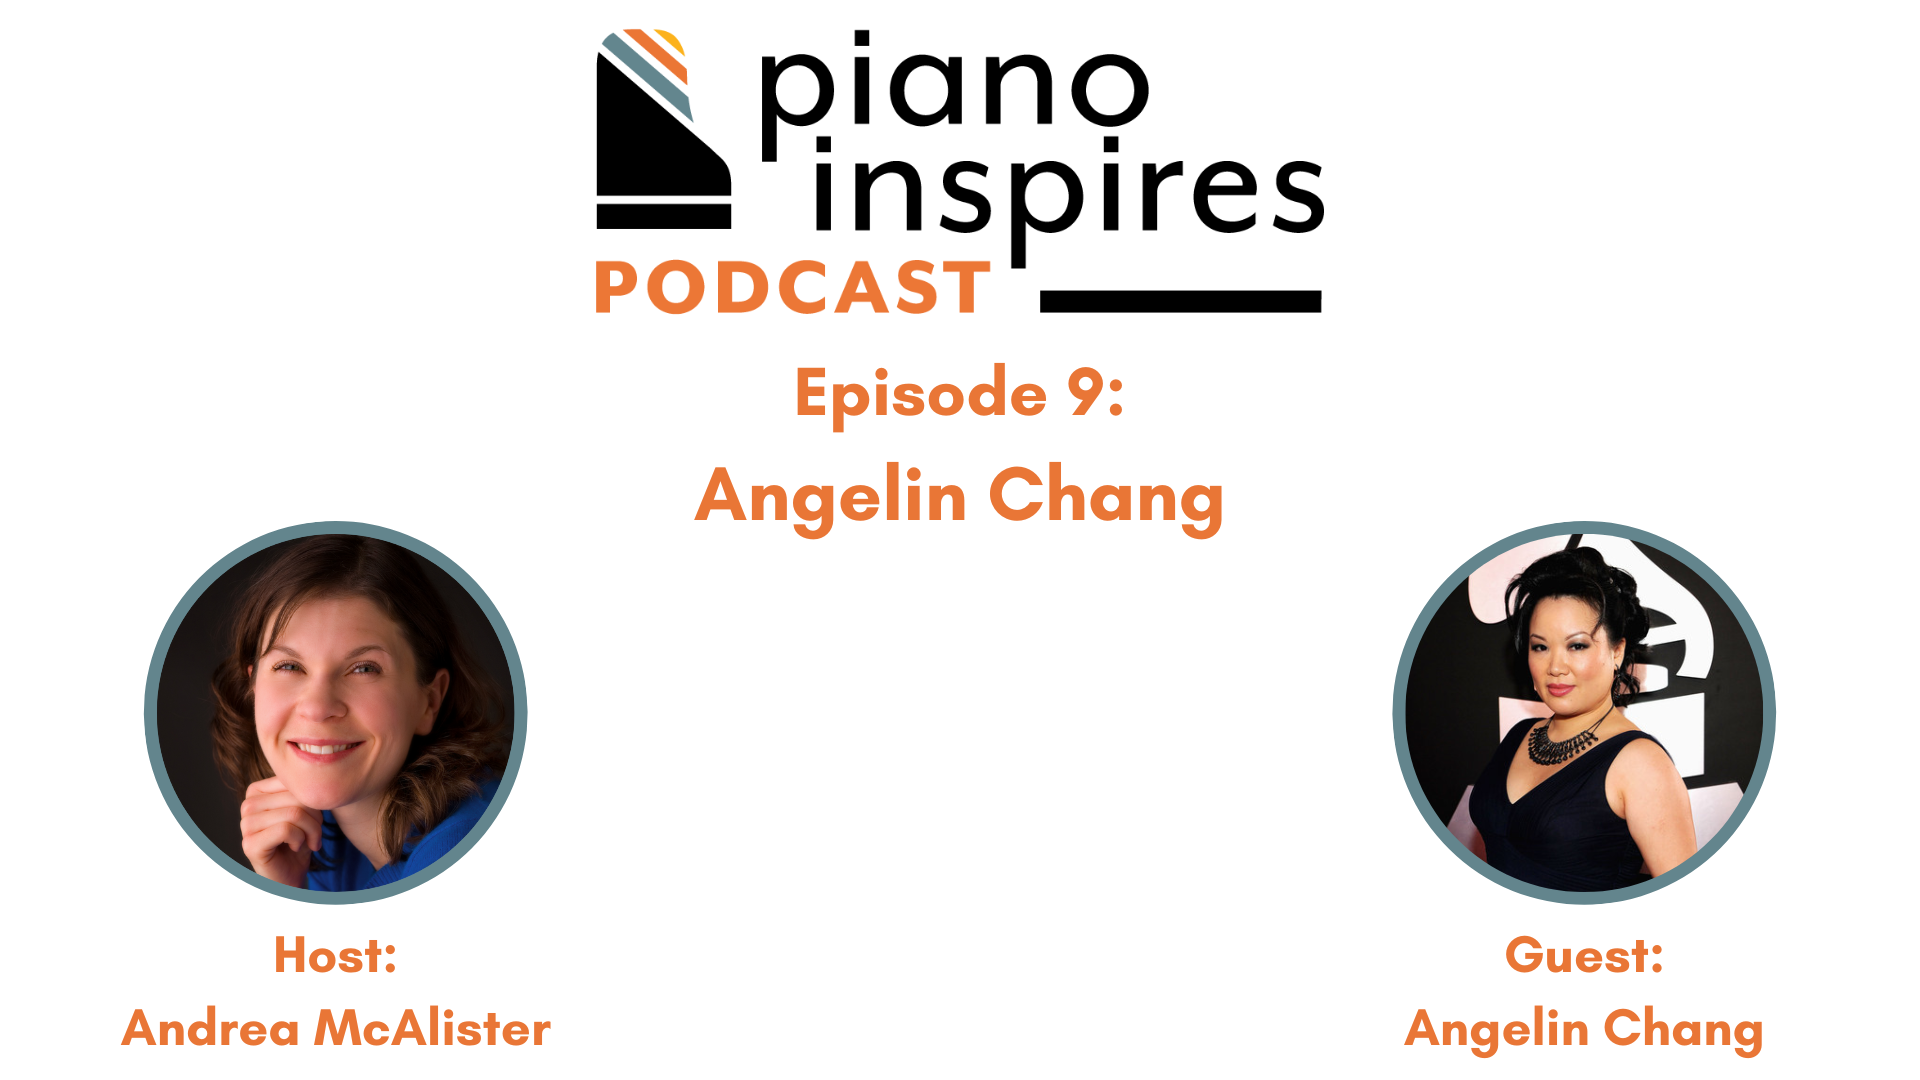 Episode 9: Angelin Chang, Asian American Grammy Award-Winning Pianist